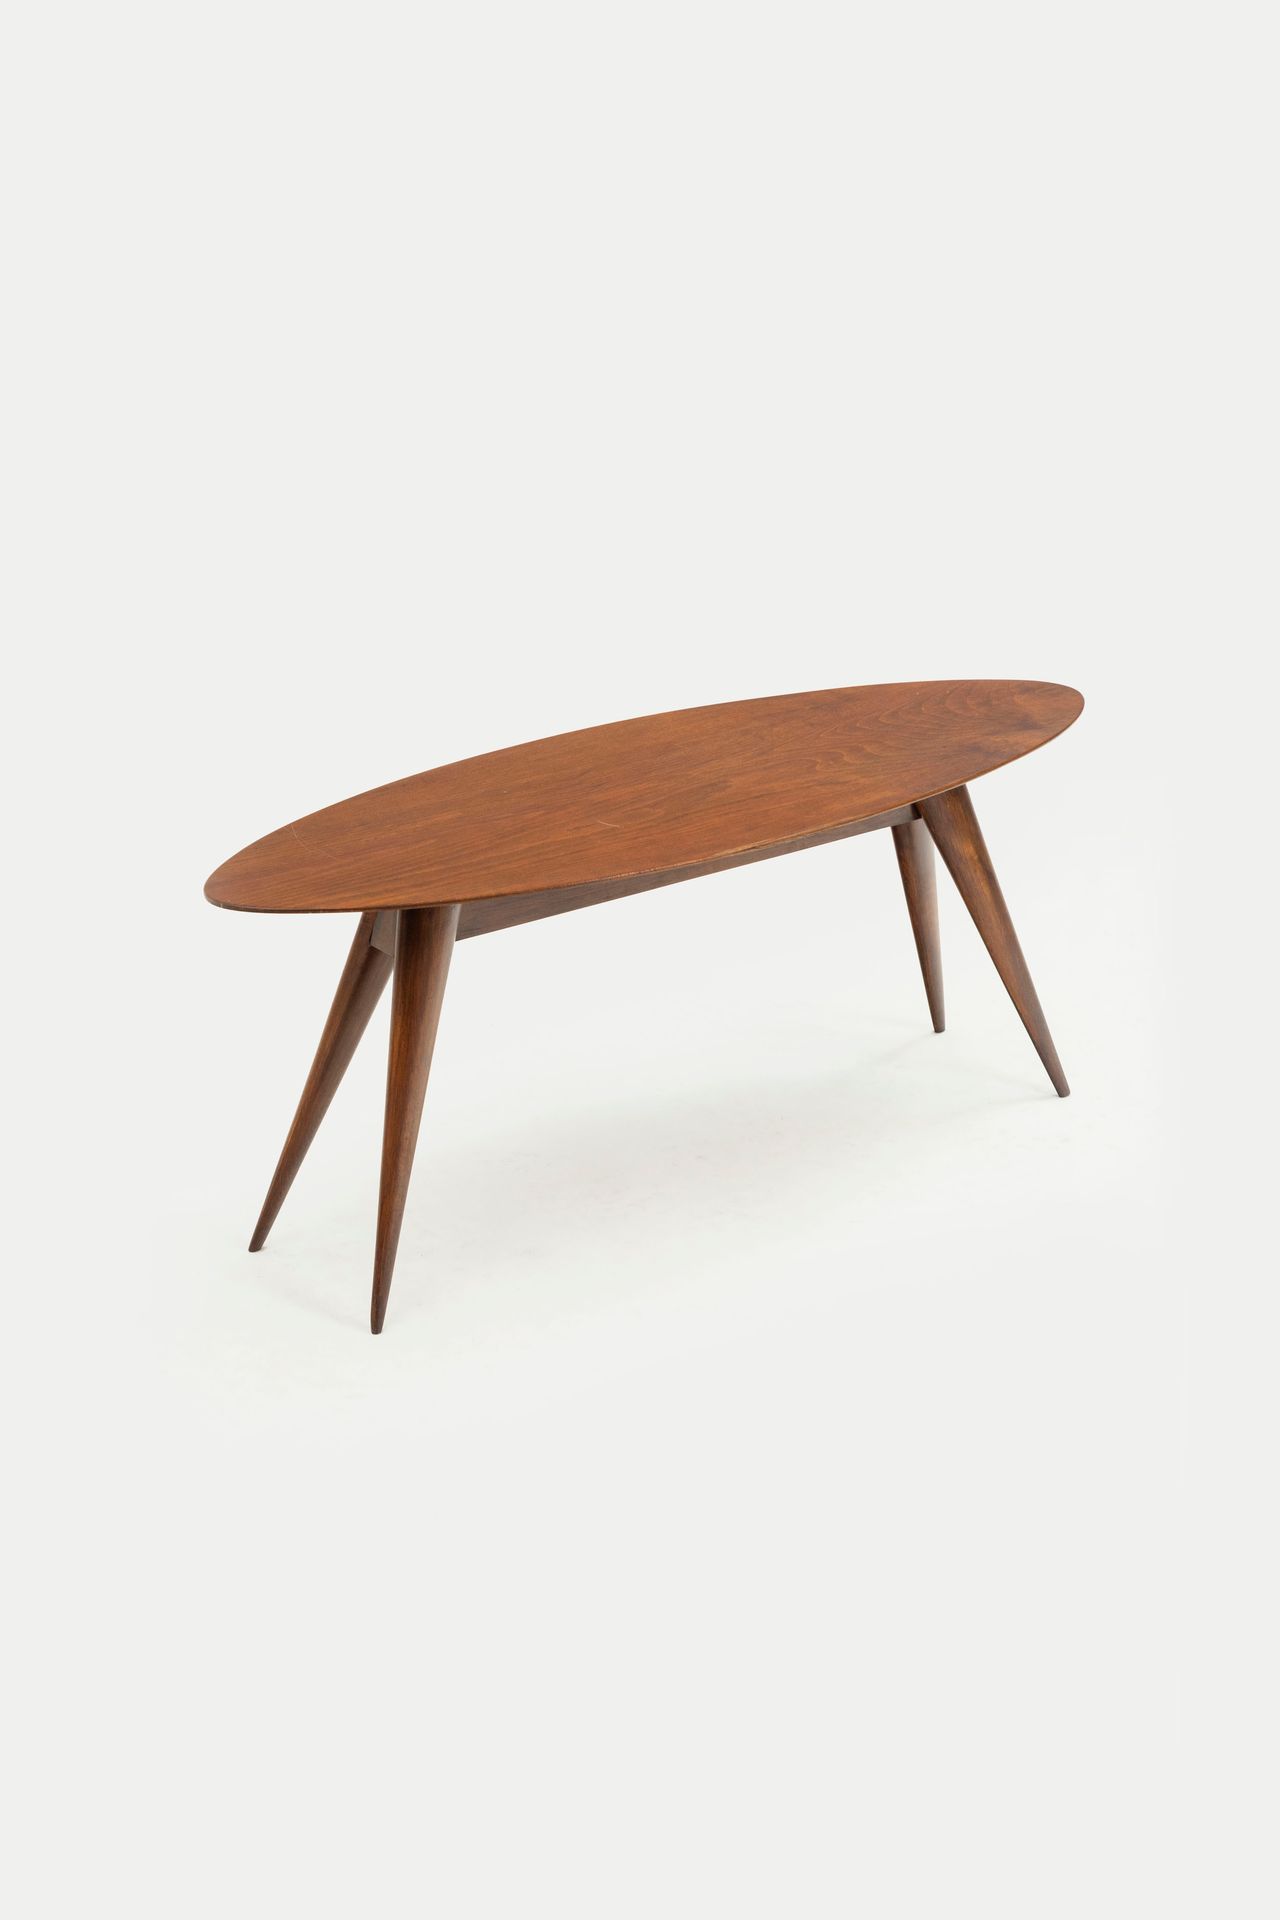 MANIFATTURA ITALIANA 矮桌。柚木，胶合板贴面的异国木材。1960s. 
Cm 40x100x34
一张意大利矮桌 



状况良好，可忽略不&hellip;